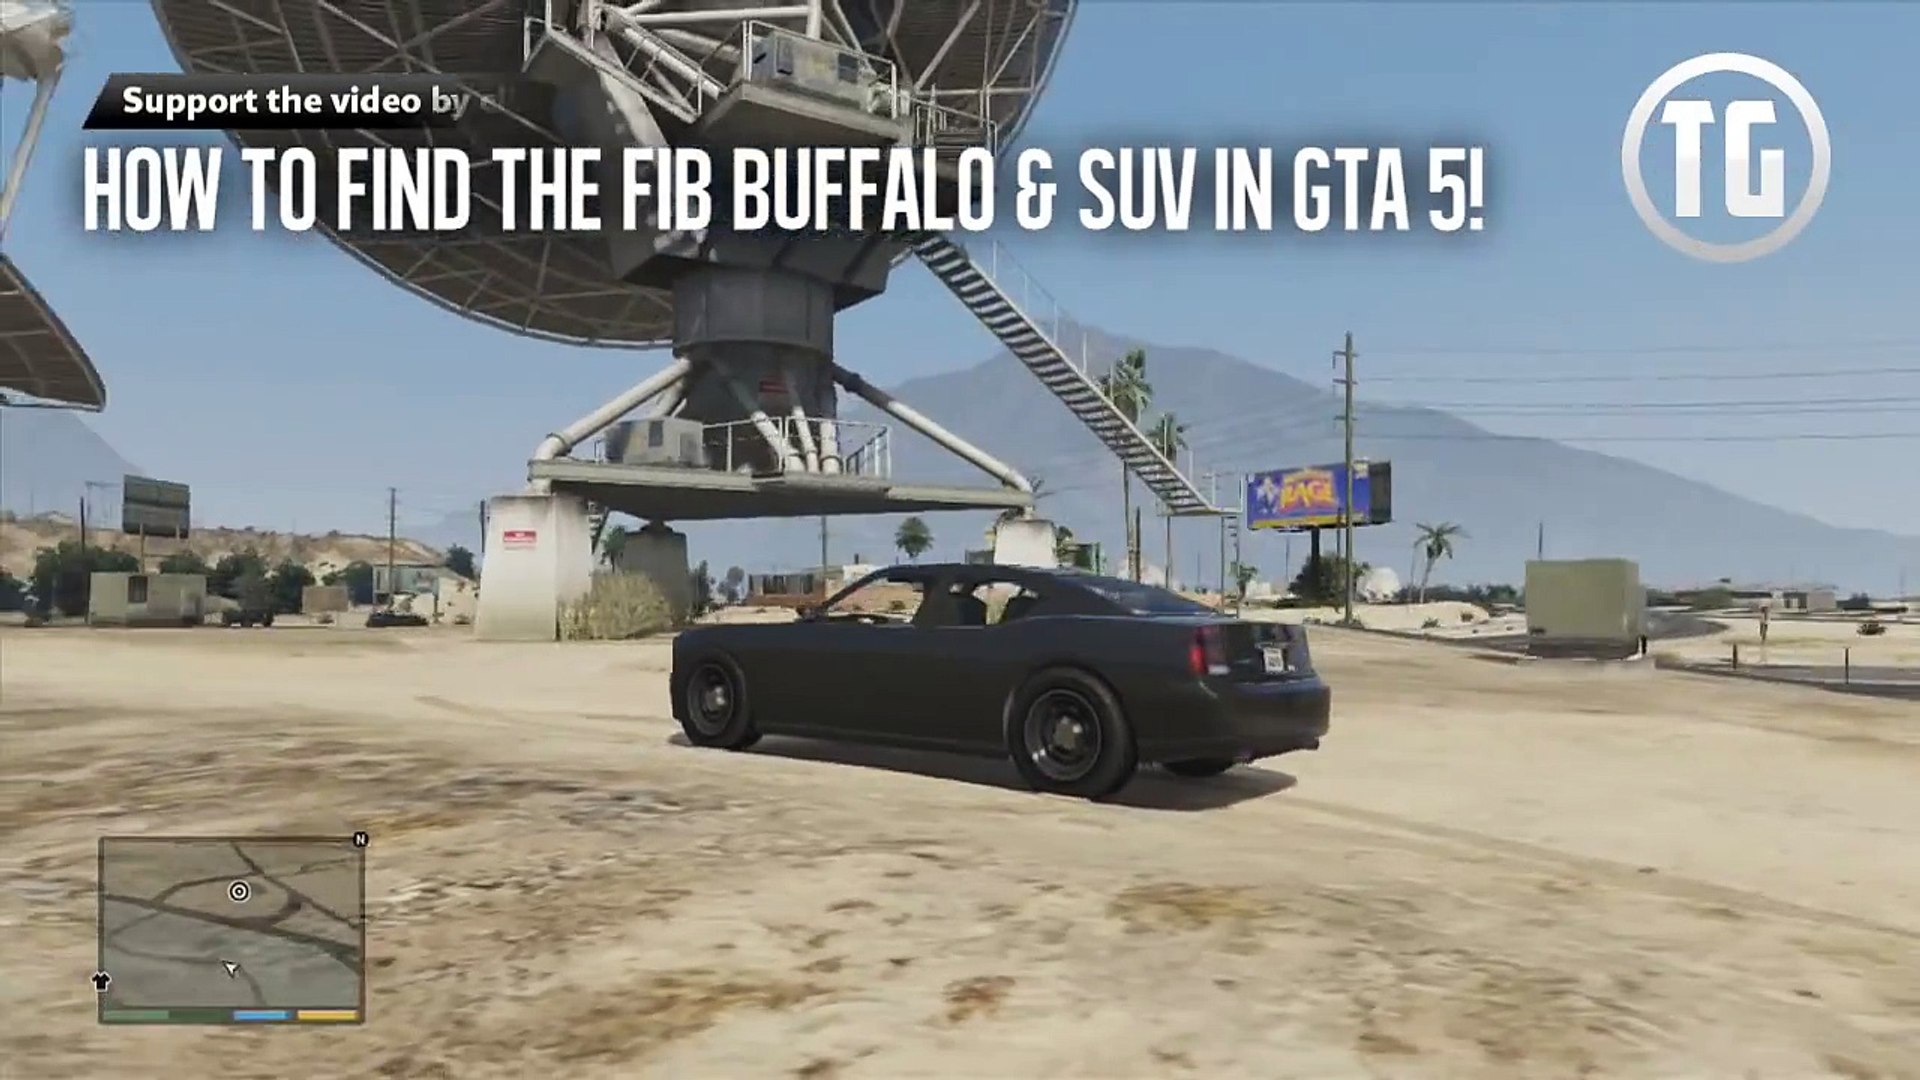 GTA 5 Buffalo & SUV Guide (GTA V) video Dailymotion